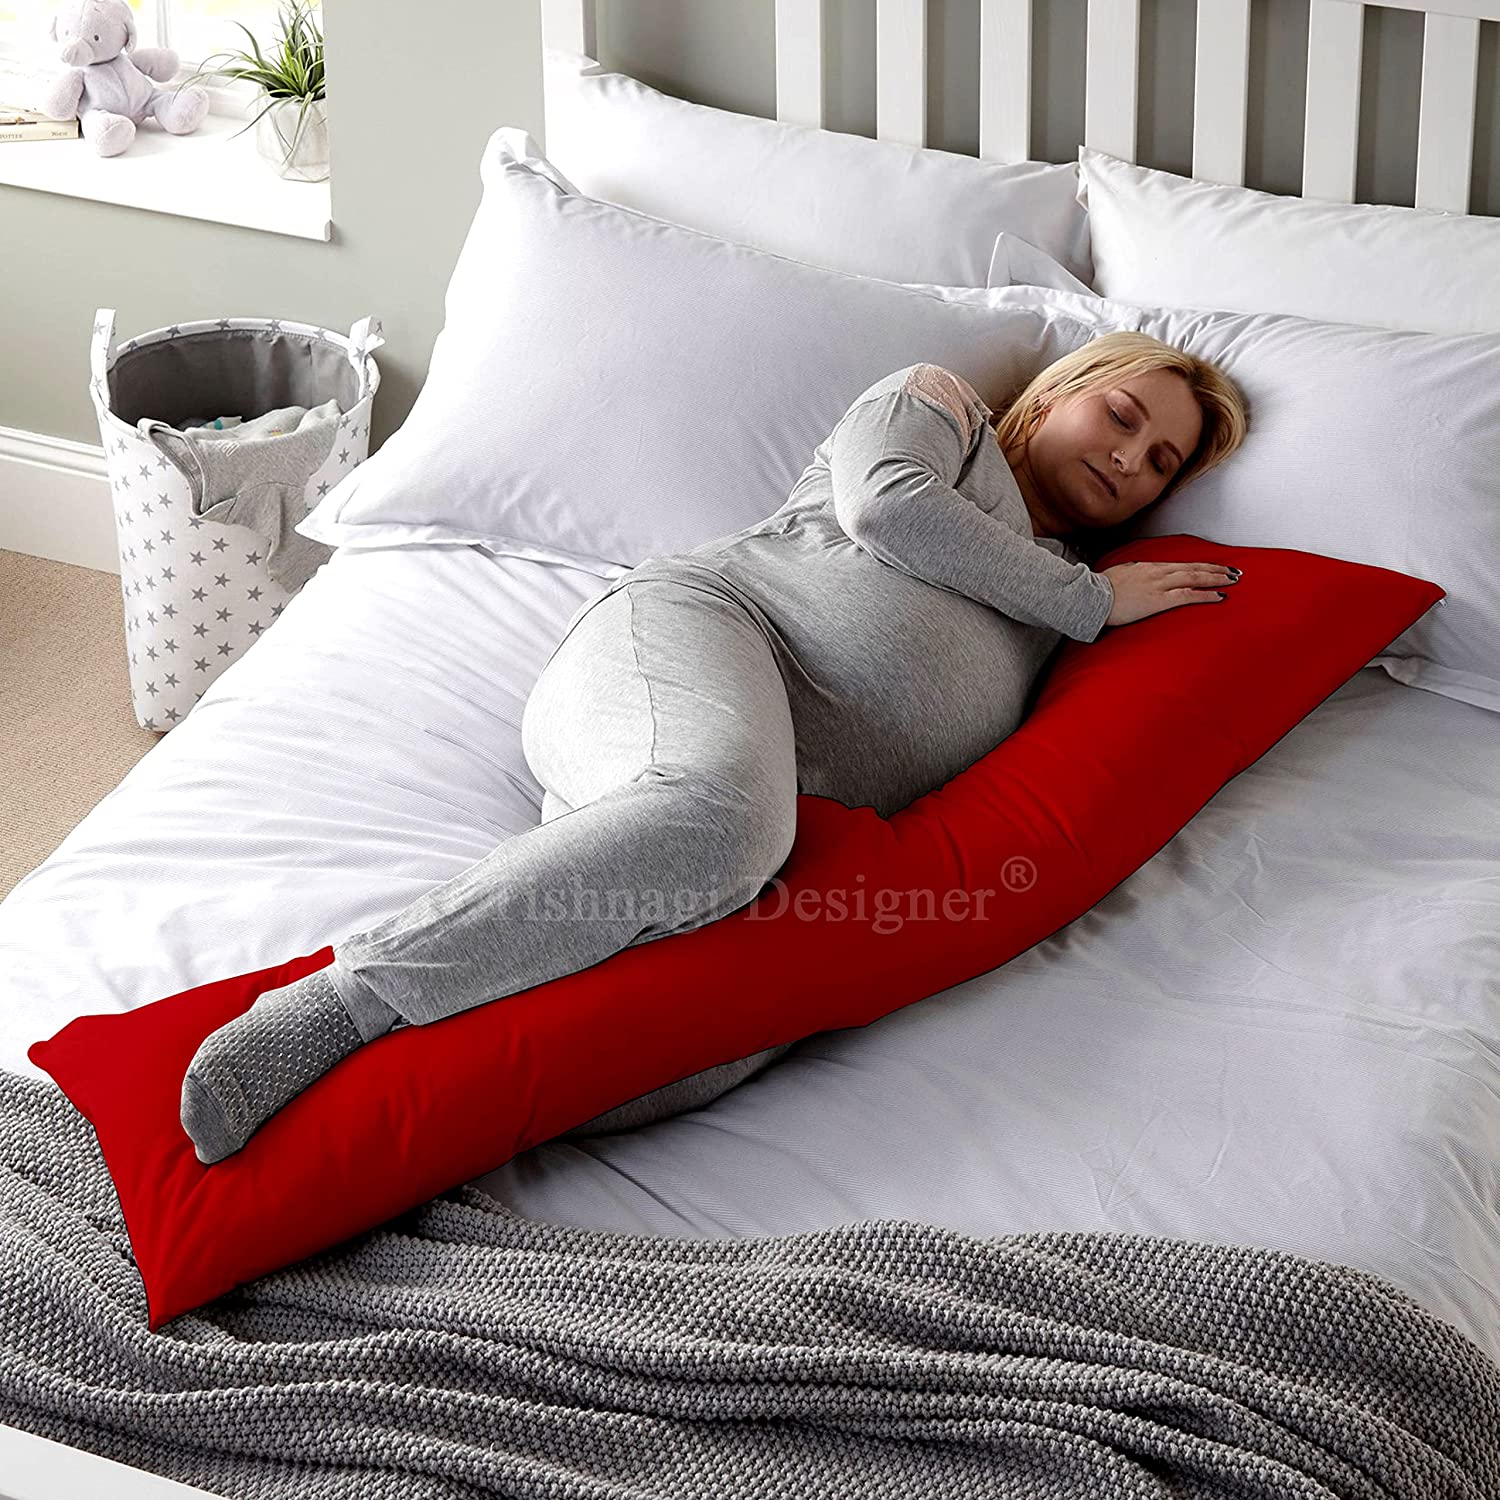 Tishnagi Designer Cotton Long Body Pillows